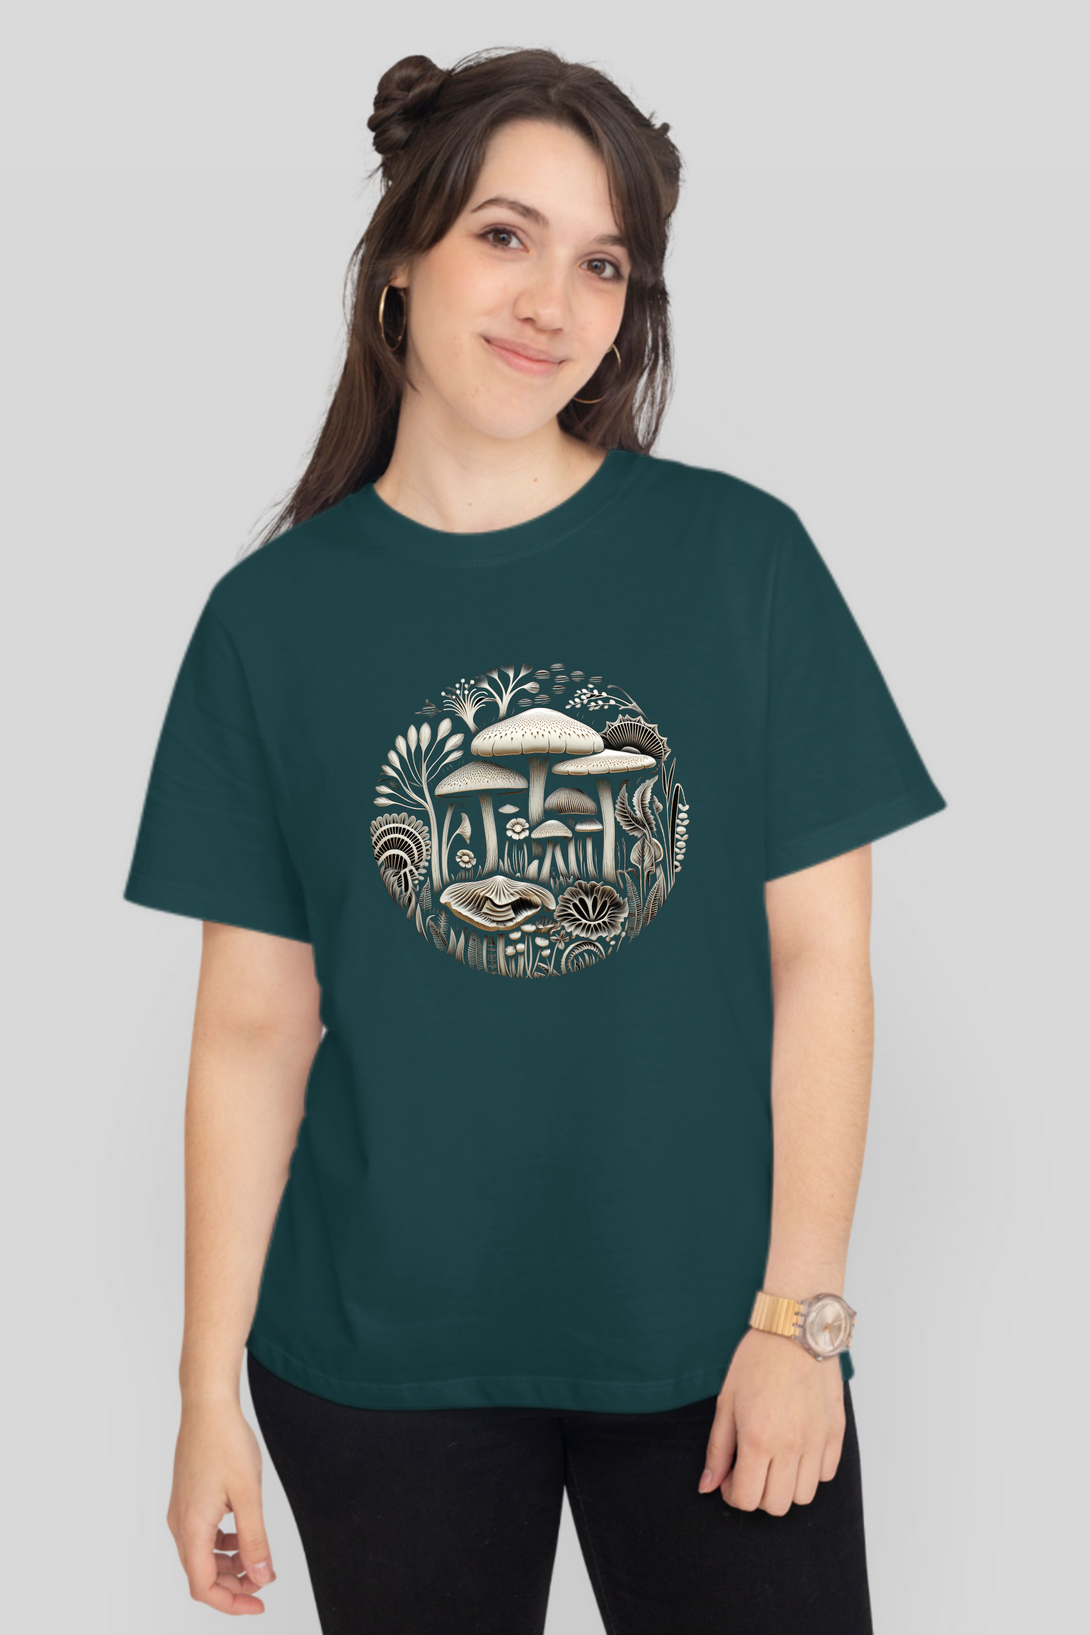 Mushroom Art Printed T-Shirt For Women - WowWaves - 8